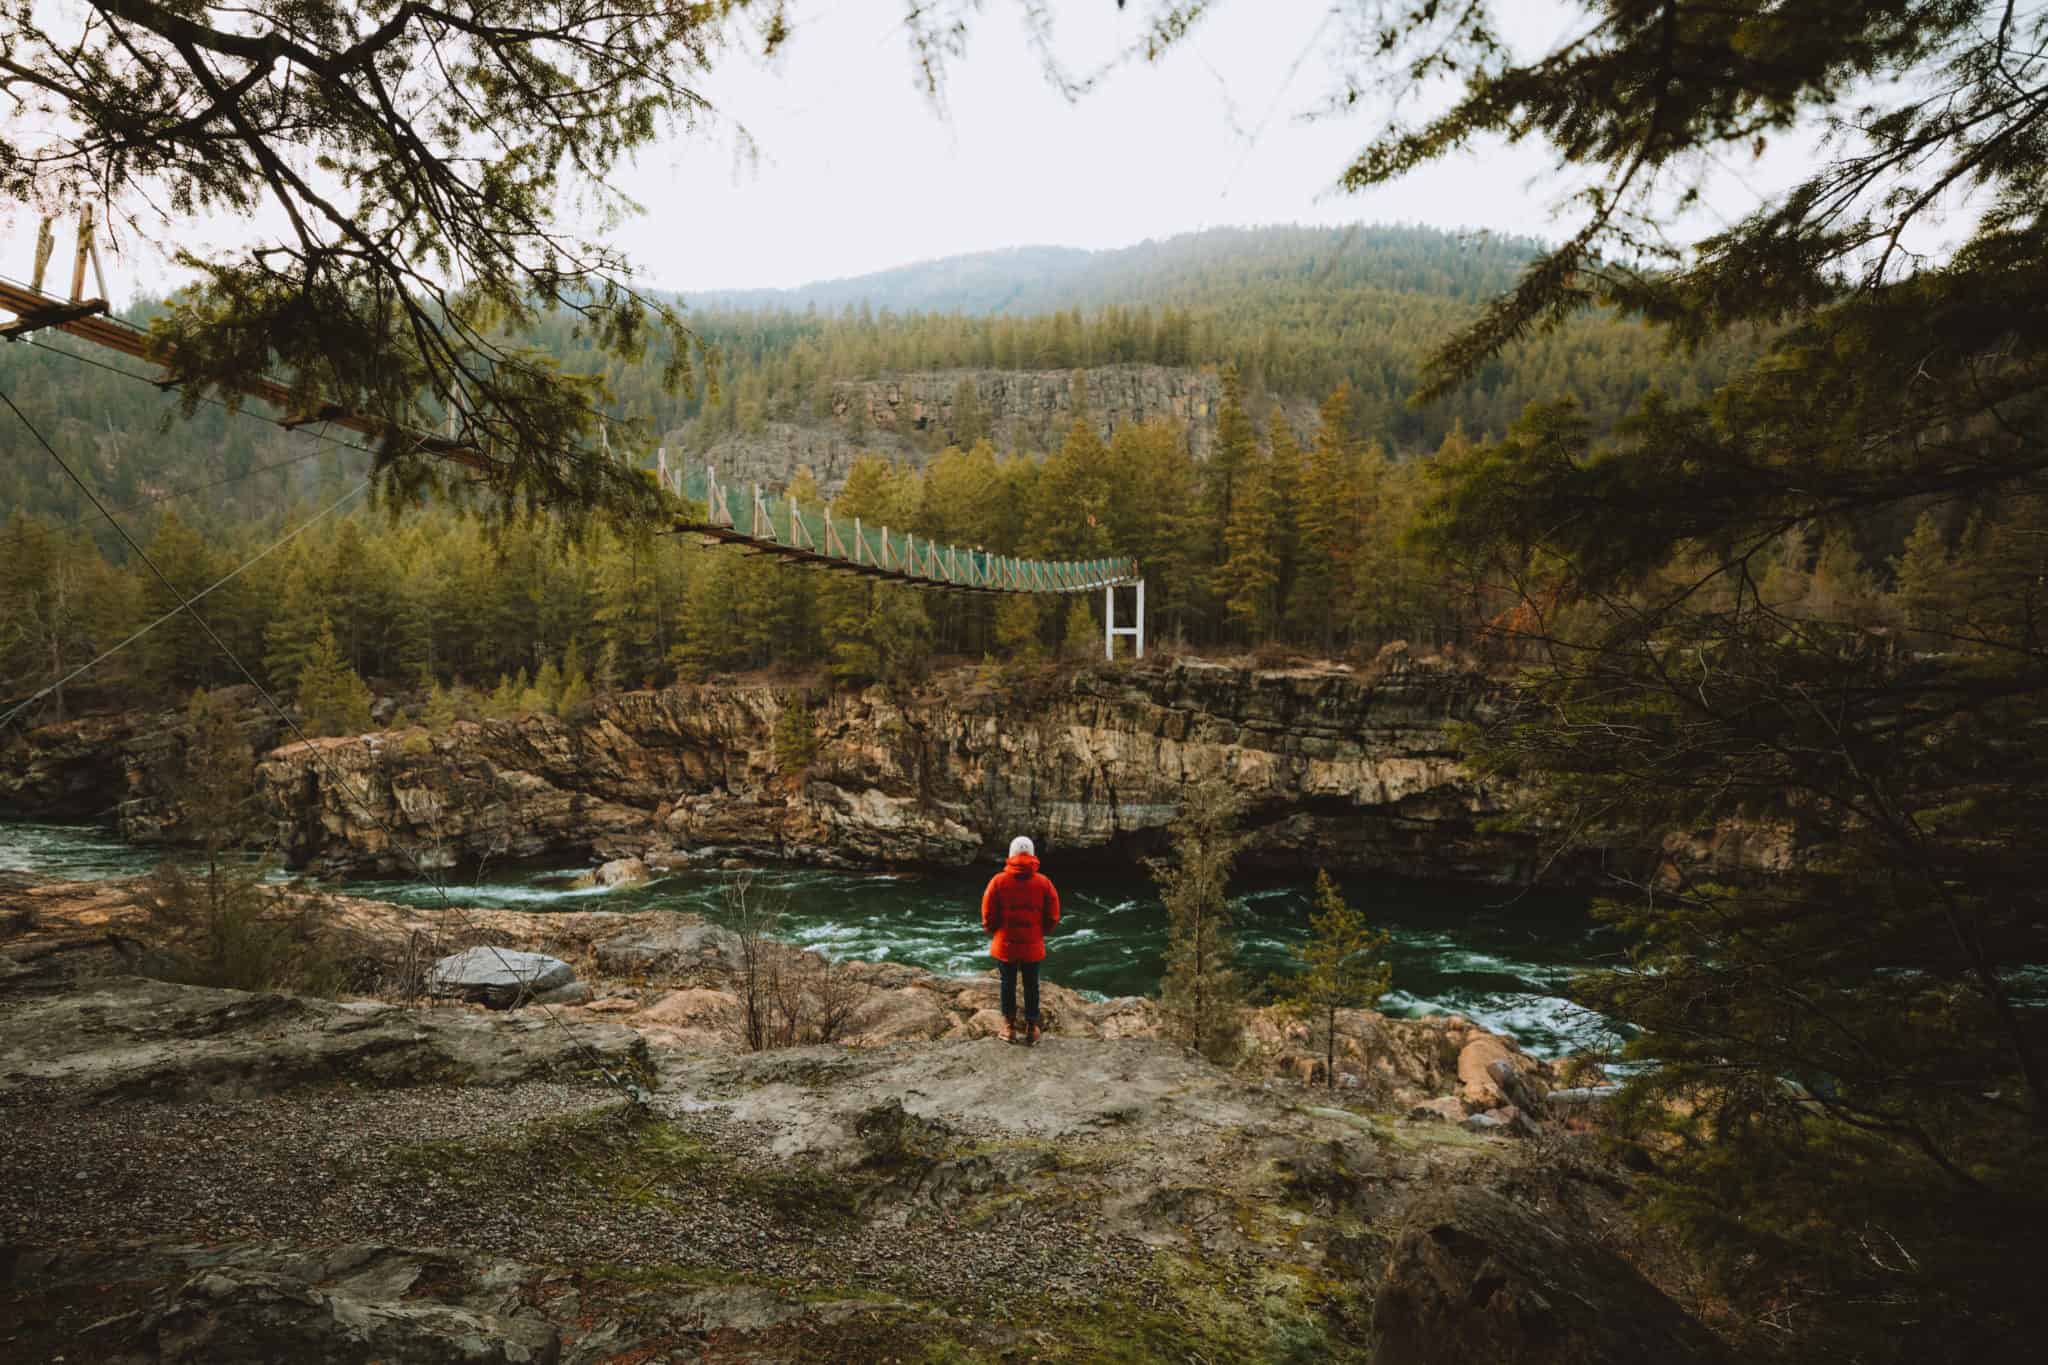 How To Reach Montana’s Hidden Kootenai Falls Swinging Bridge On Your Next Inland Northwest Adventure